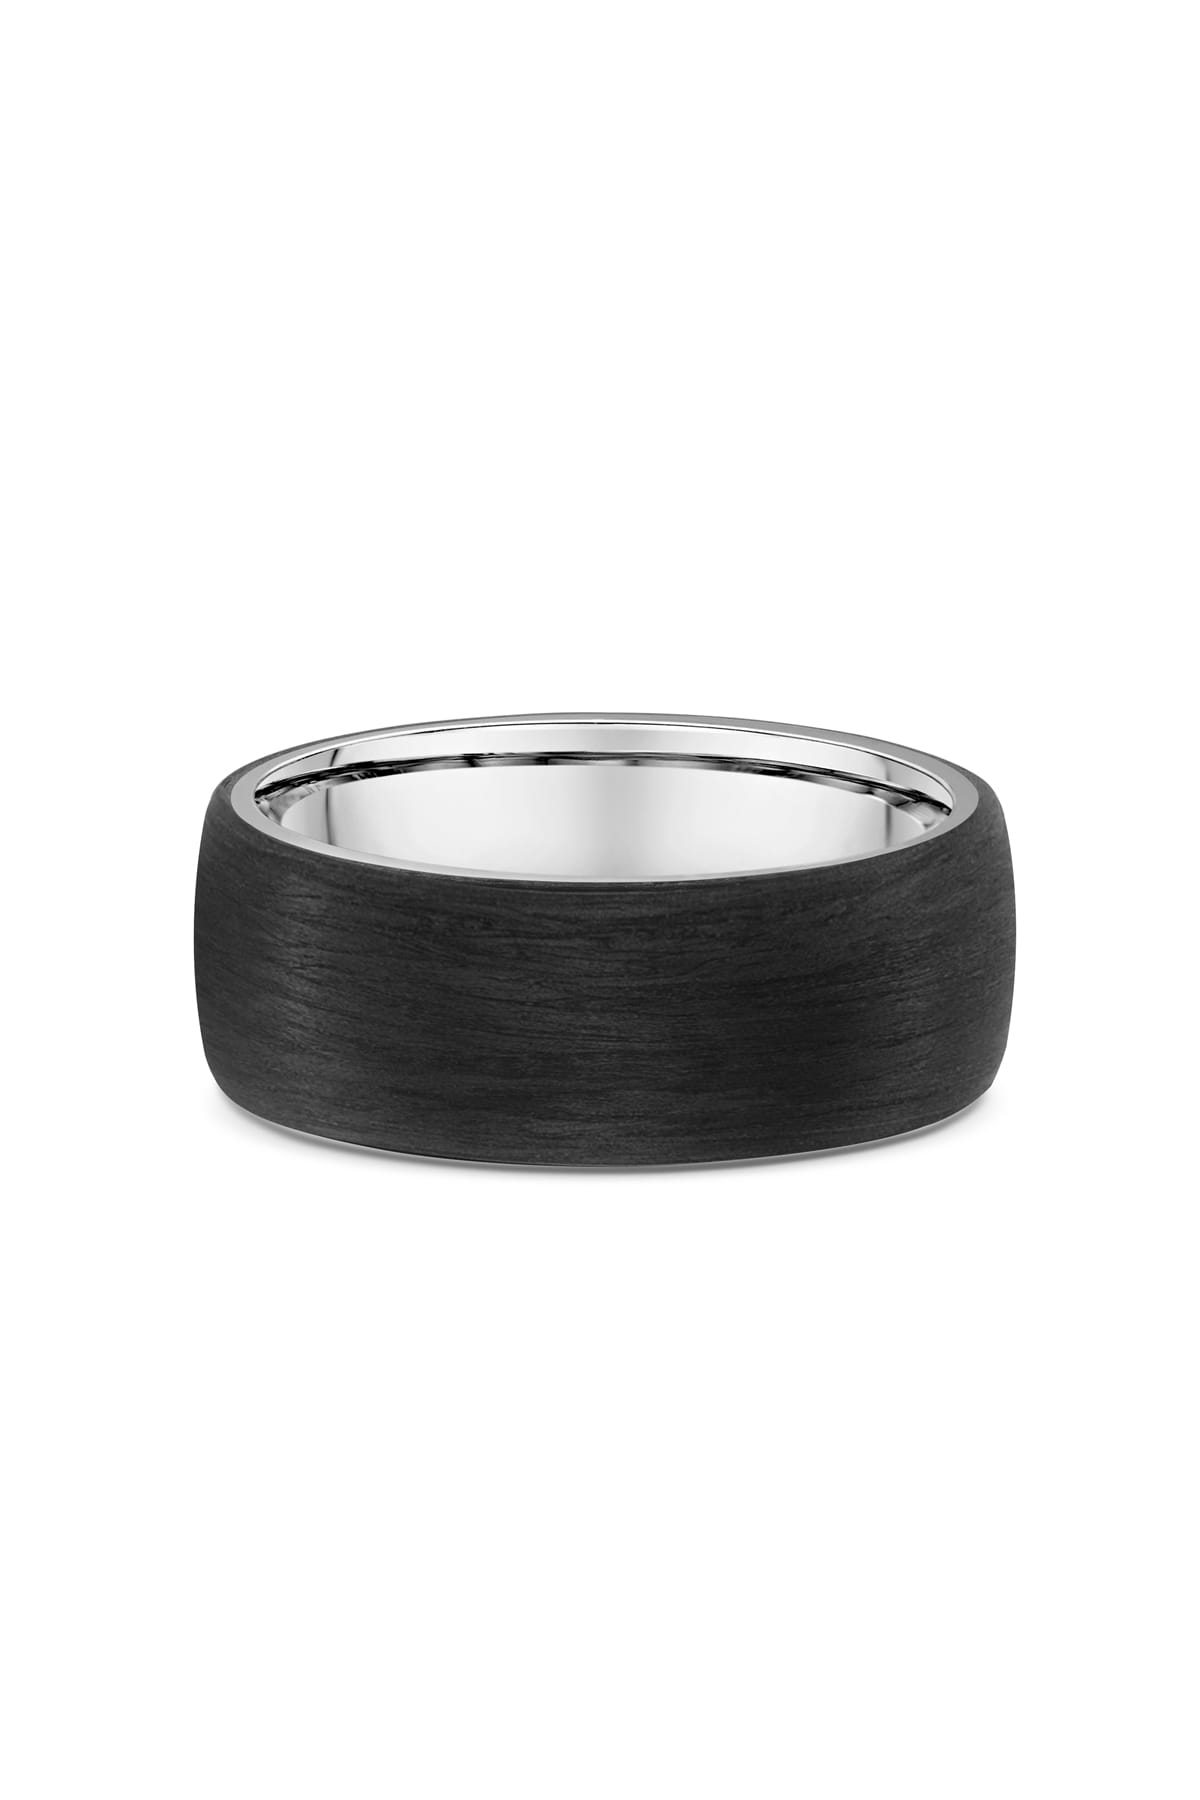 Men's Carbon Fibre And Titanium Wedding Ring available at LeGassick Diamonds and Jewellery Gold Coast, Australia.